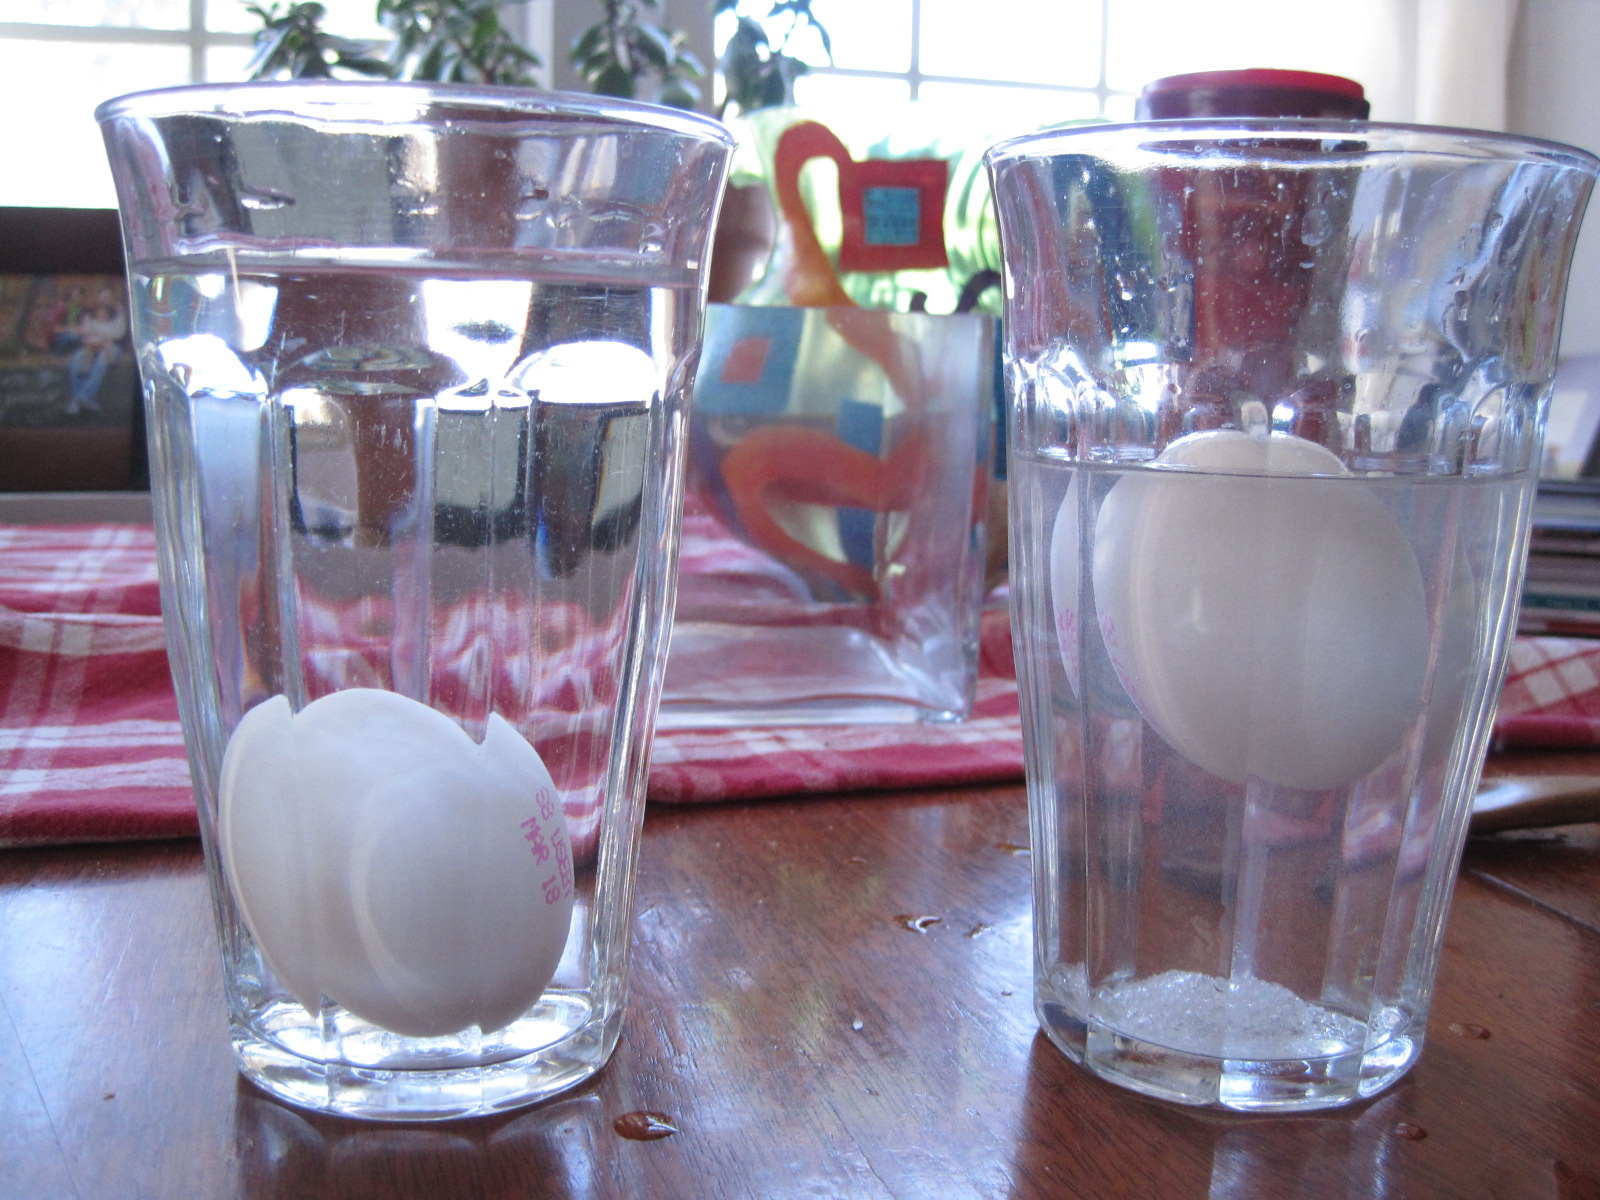 cikgu lim love science: Fun experiments (1) Floating Egg!